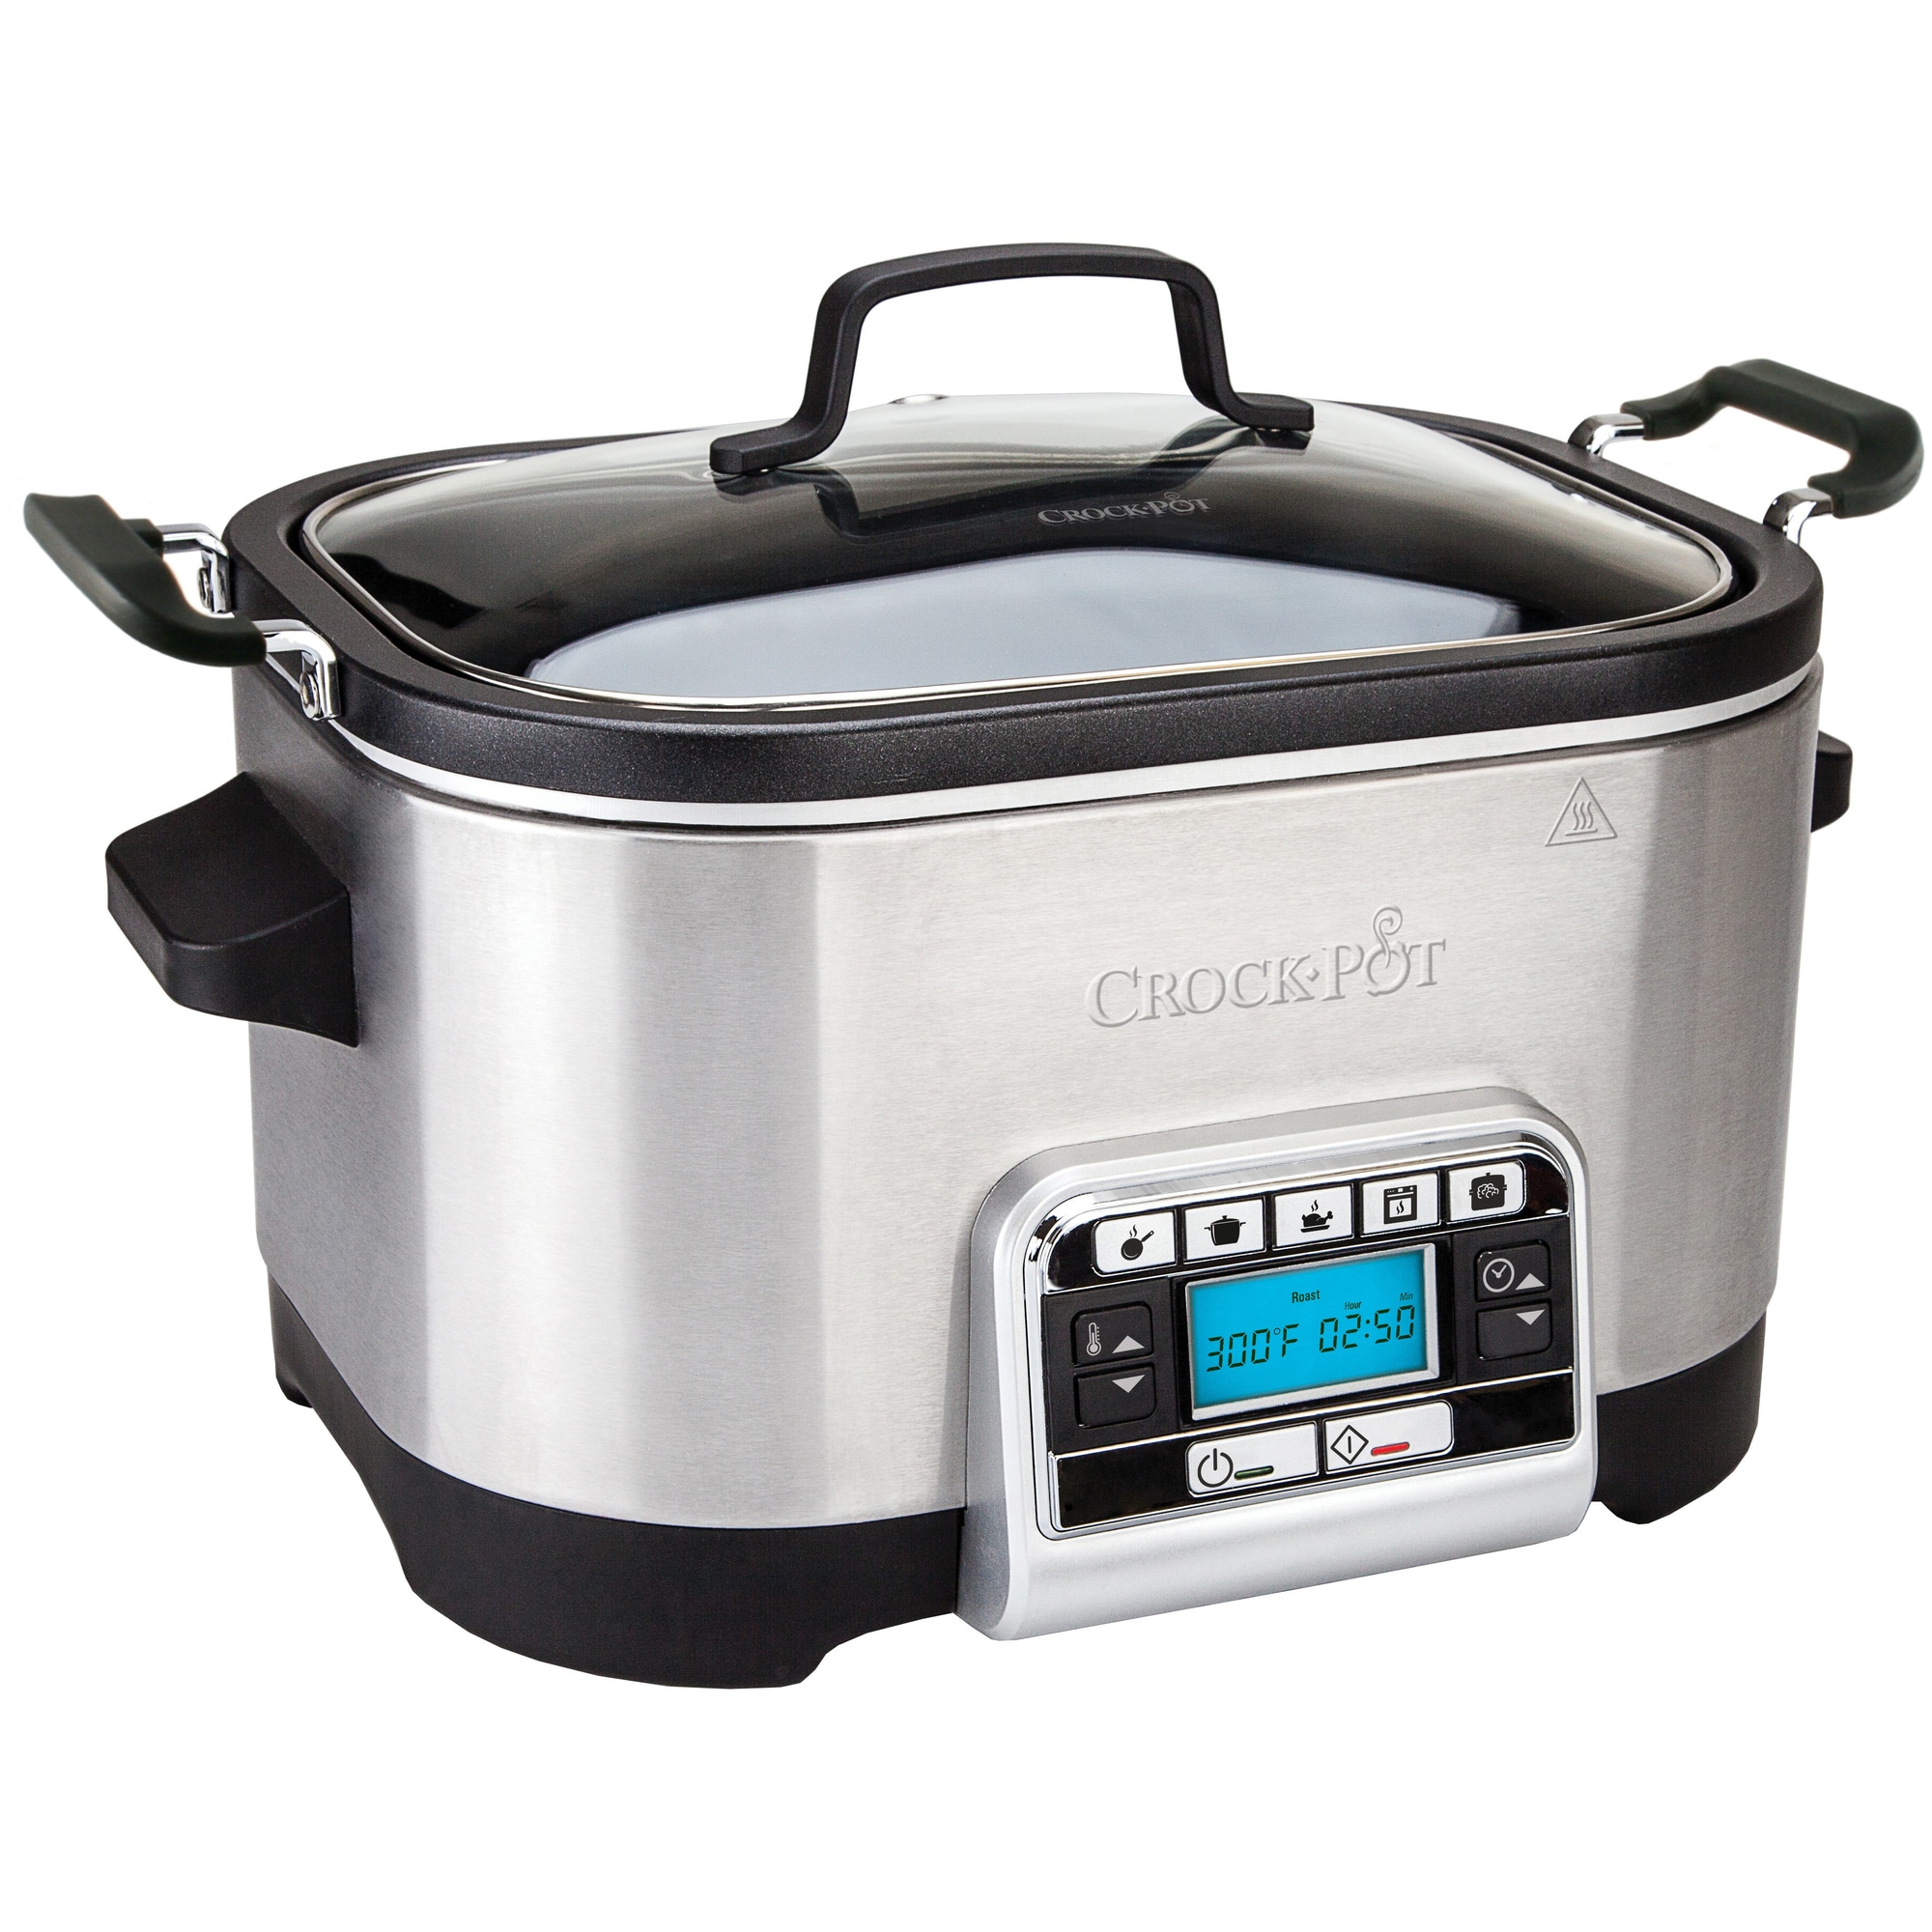 7: Crock-Pot slow cooker